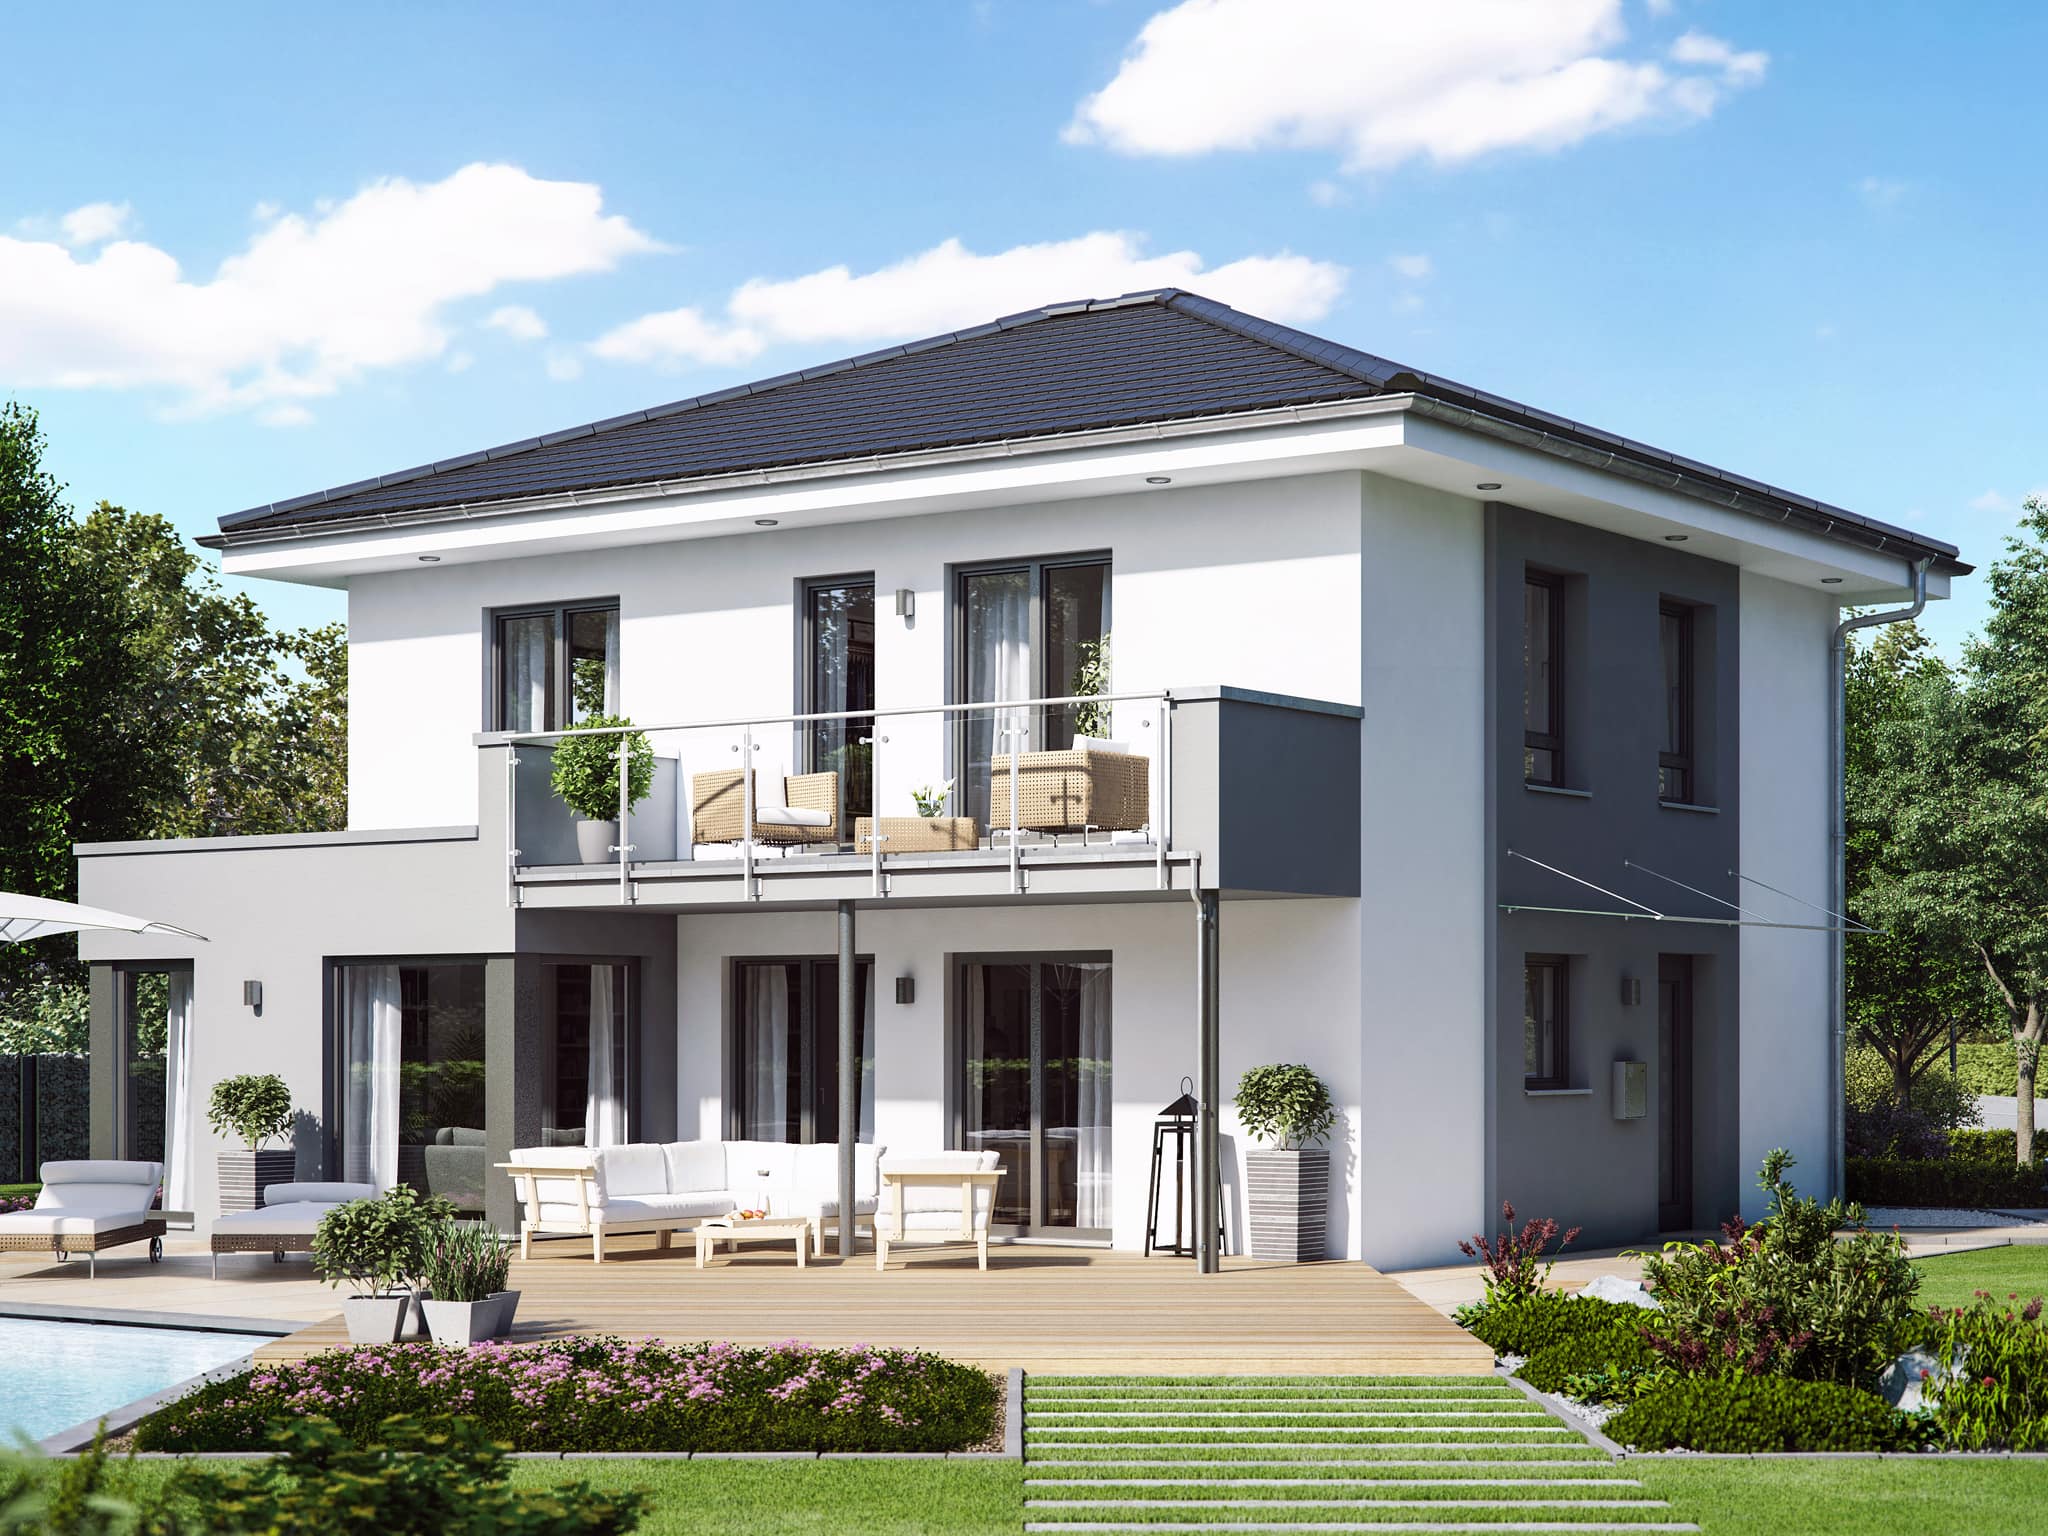 Stadtvilla modern mit Walmdach, 5 Zimmer, 145 qm - Fertighaus bauen Ideen Living Haus SUNSHINE 143 V6 - HausbauDirekt.de